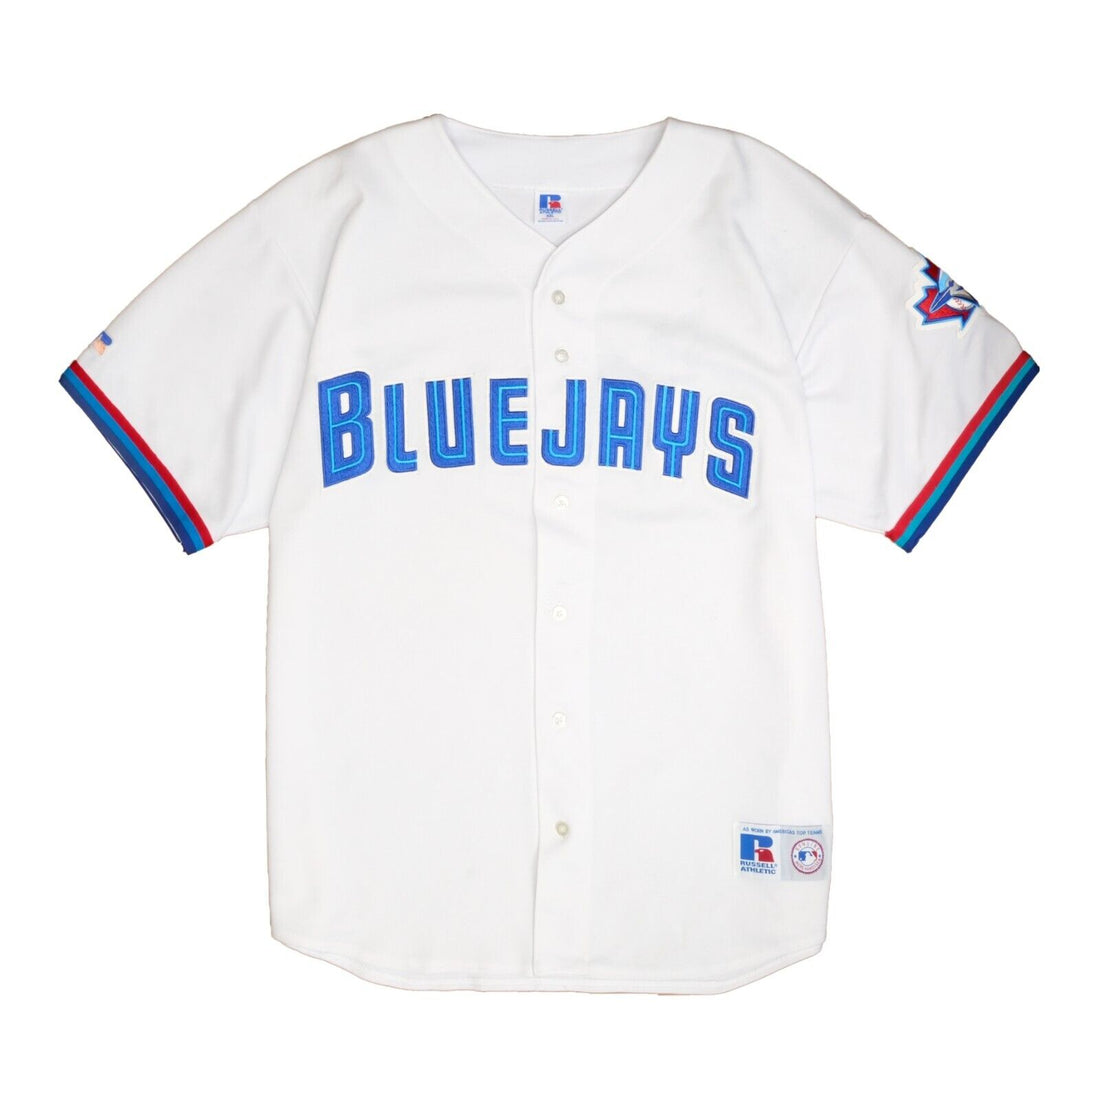 VTG 90s Russell Athletic Toronto Blue Jays MLB Baseball Jersey Shirt Large